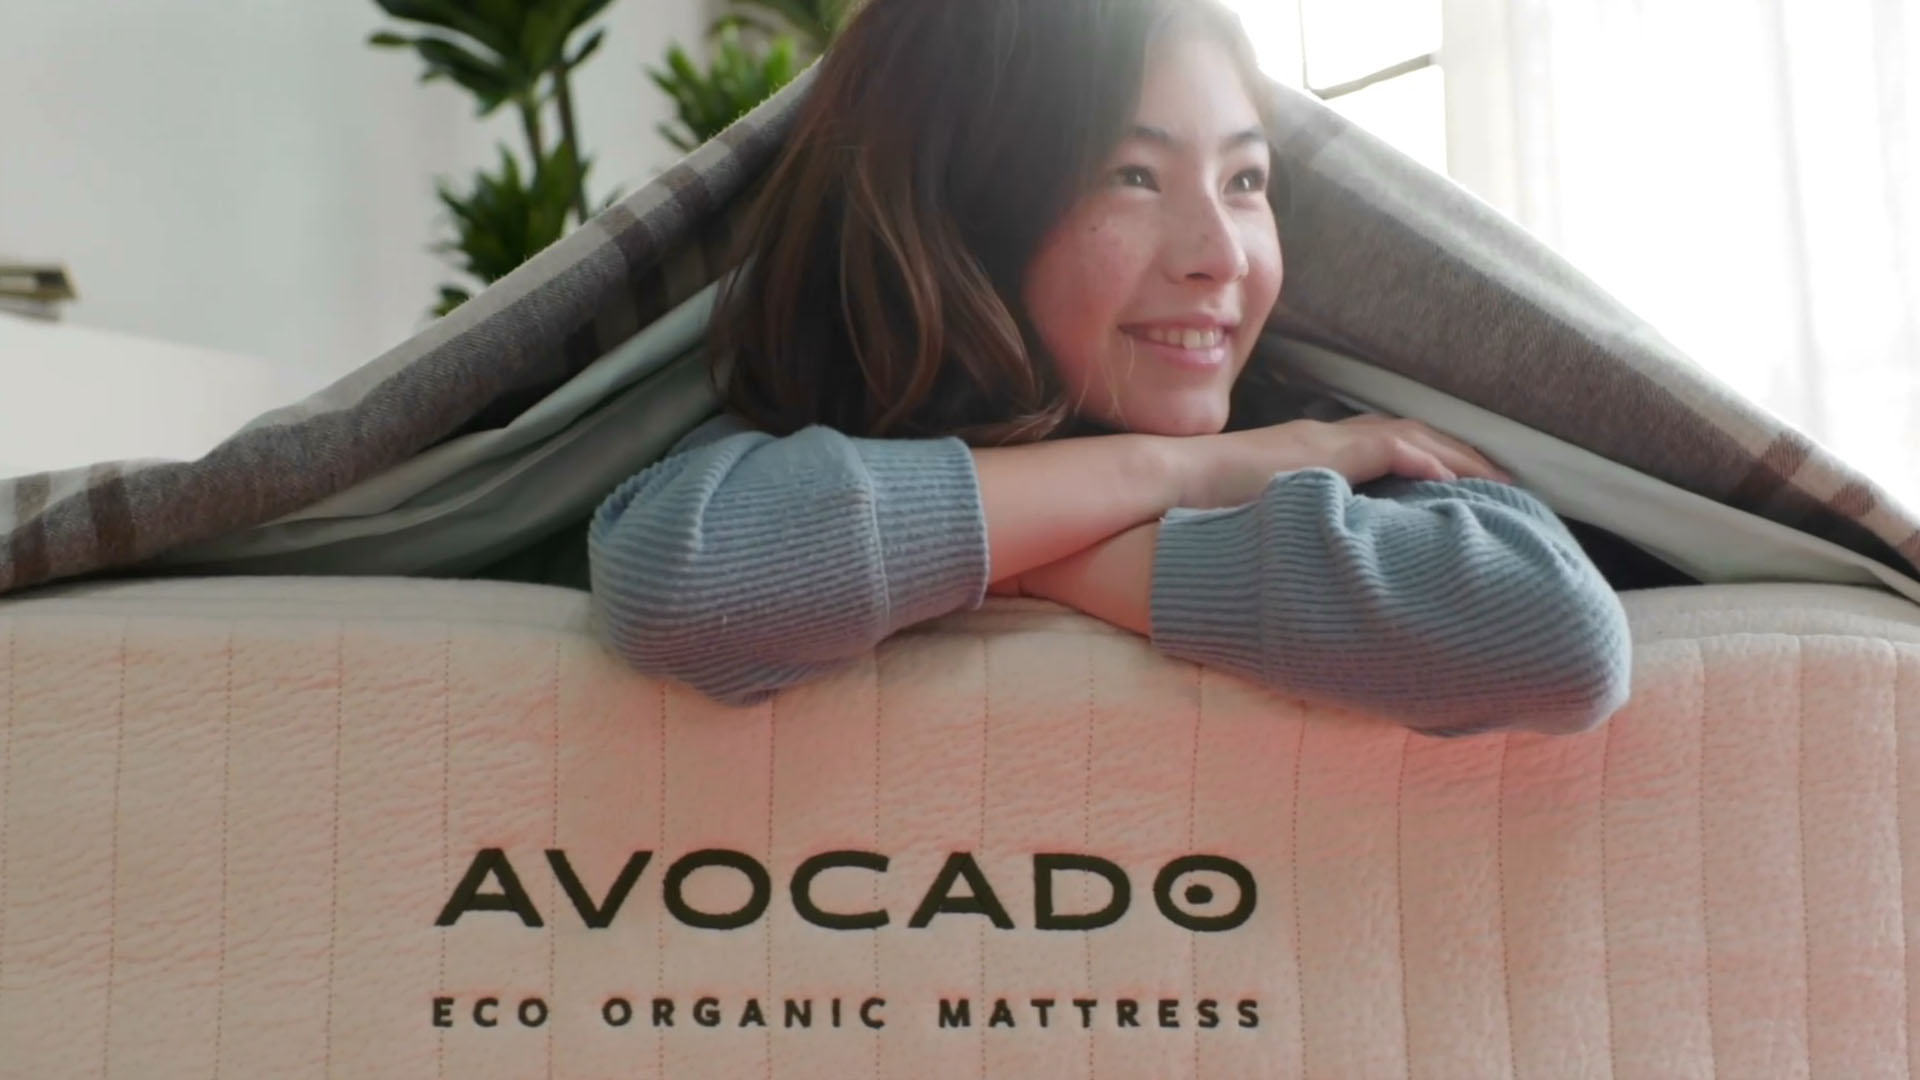 Who sells Avocado mattress near me in Evanston